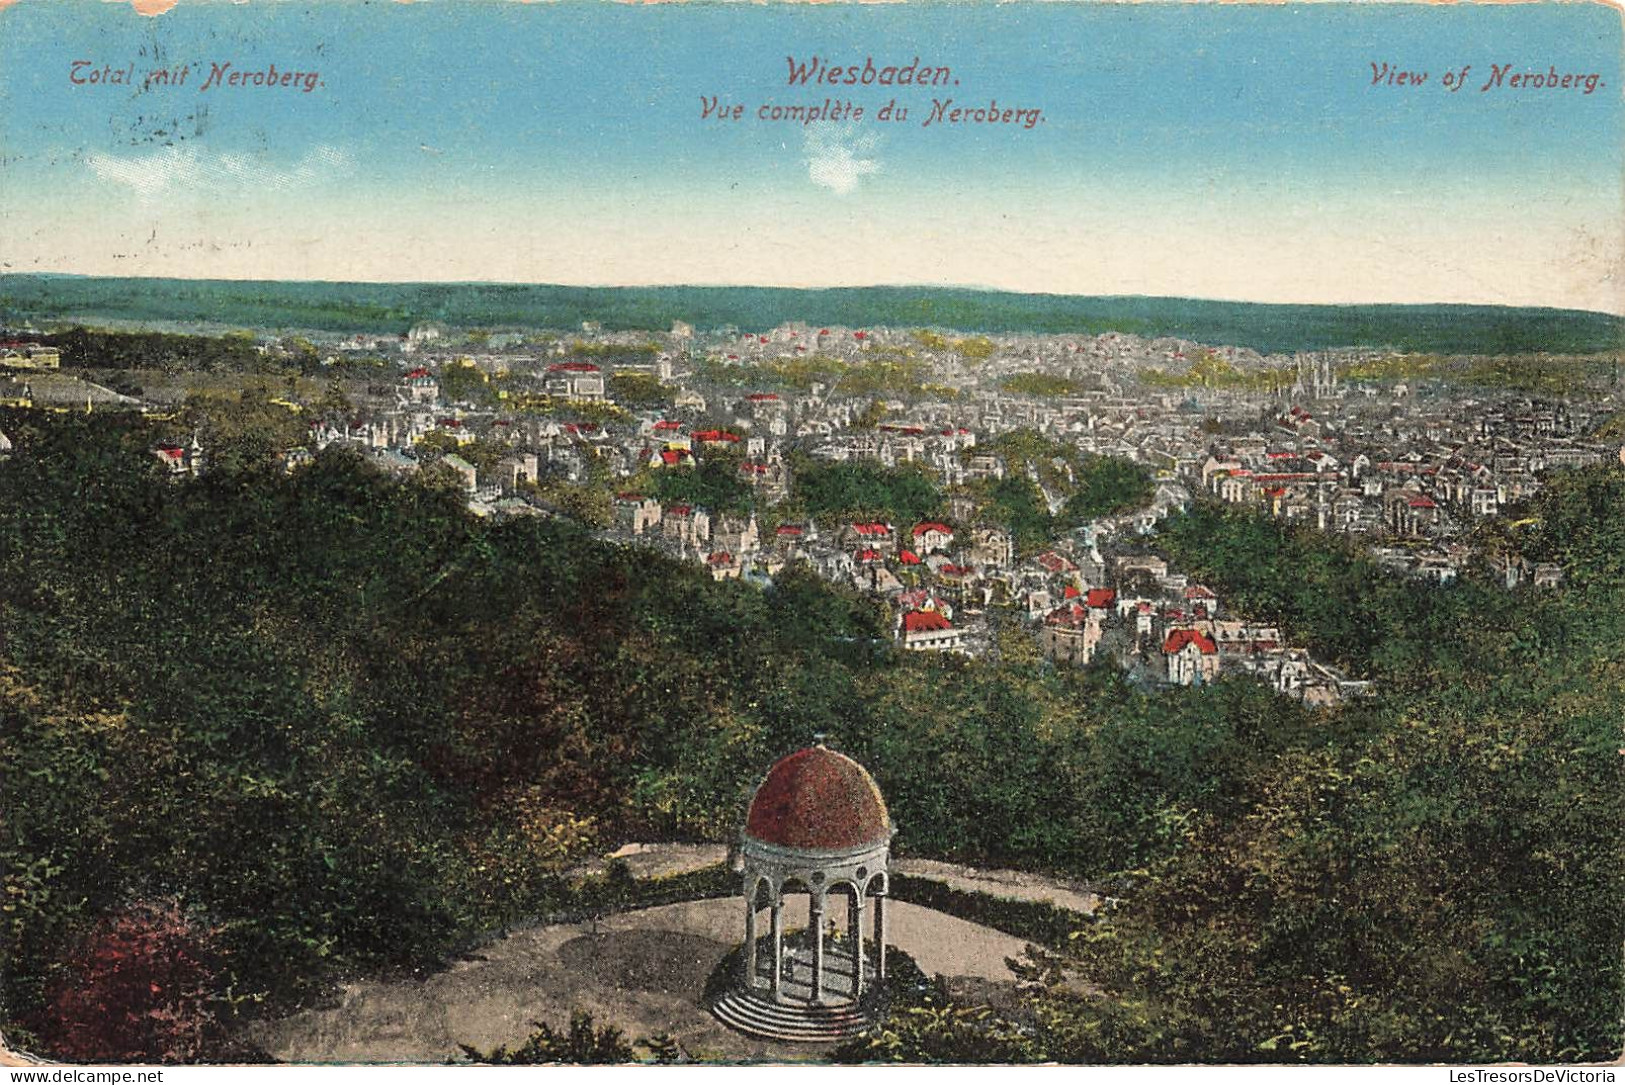 ALLEMAGNE - Wiesbaden - Vue Complete Du Neroberg - Colorisé -  Carte Postale Ancienne - Wiesbaden